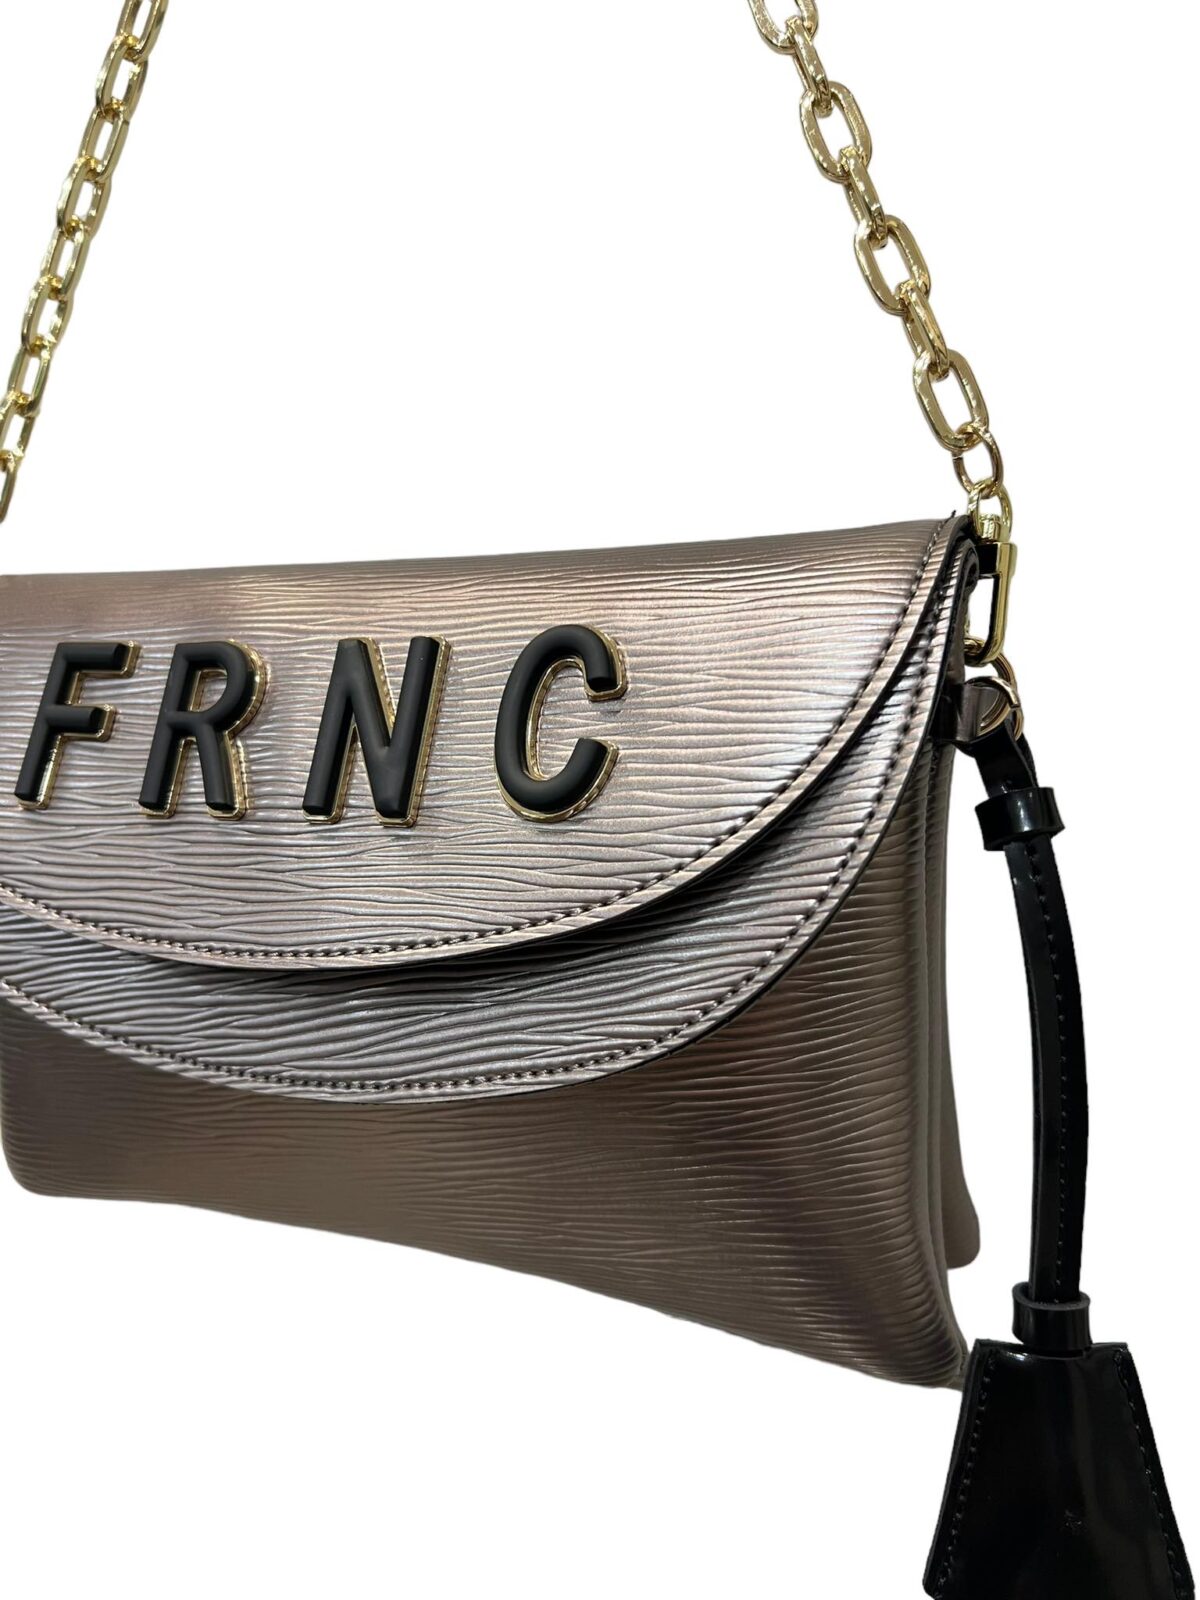 FRNC τσαντάκι με διπλό καπάκι μετεωρίτης